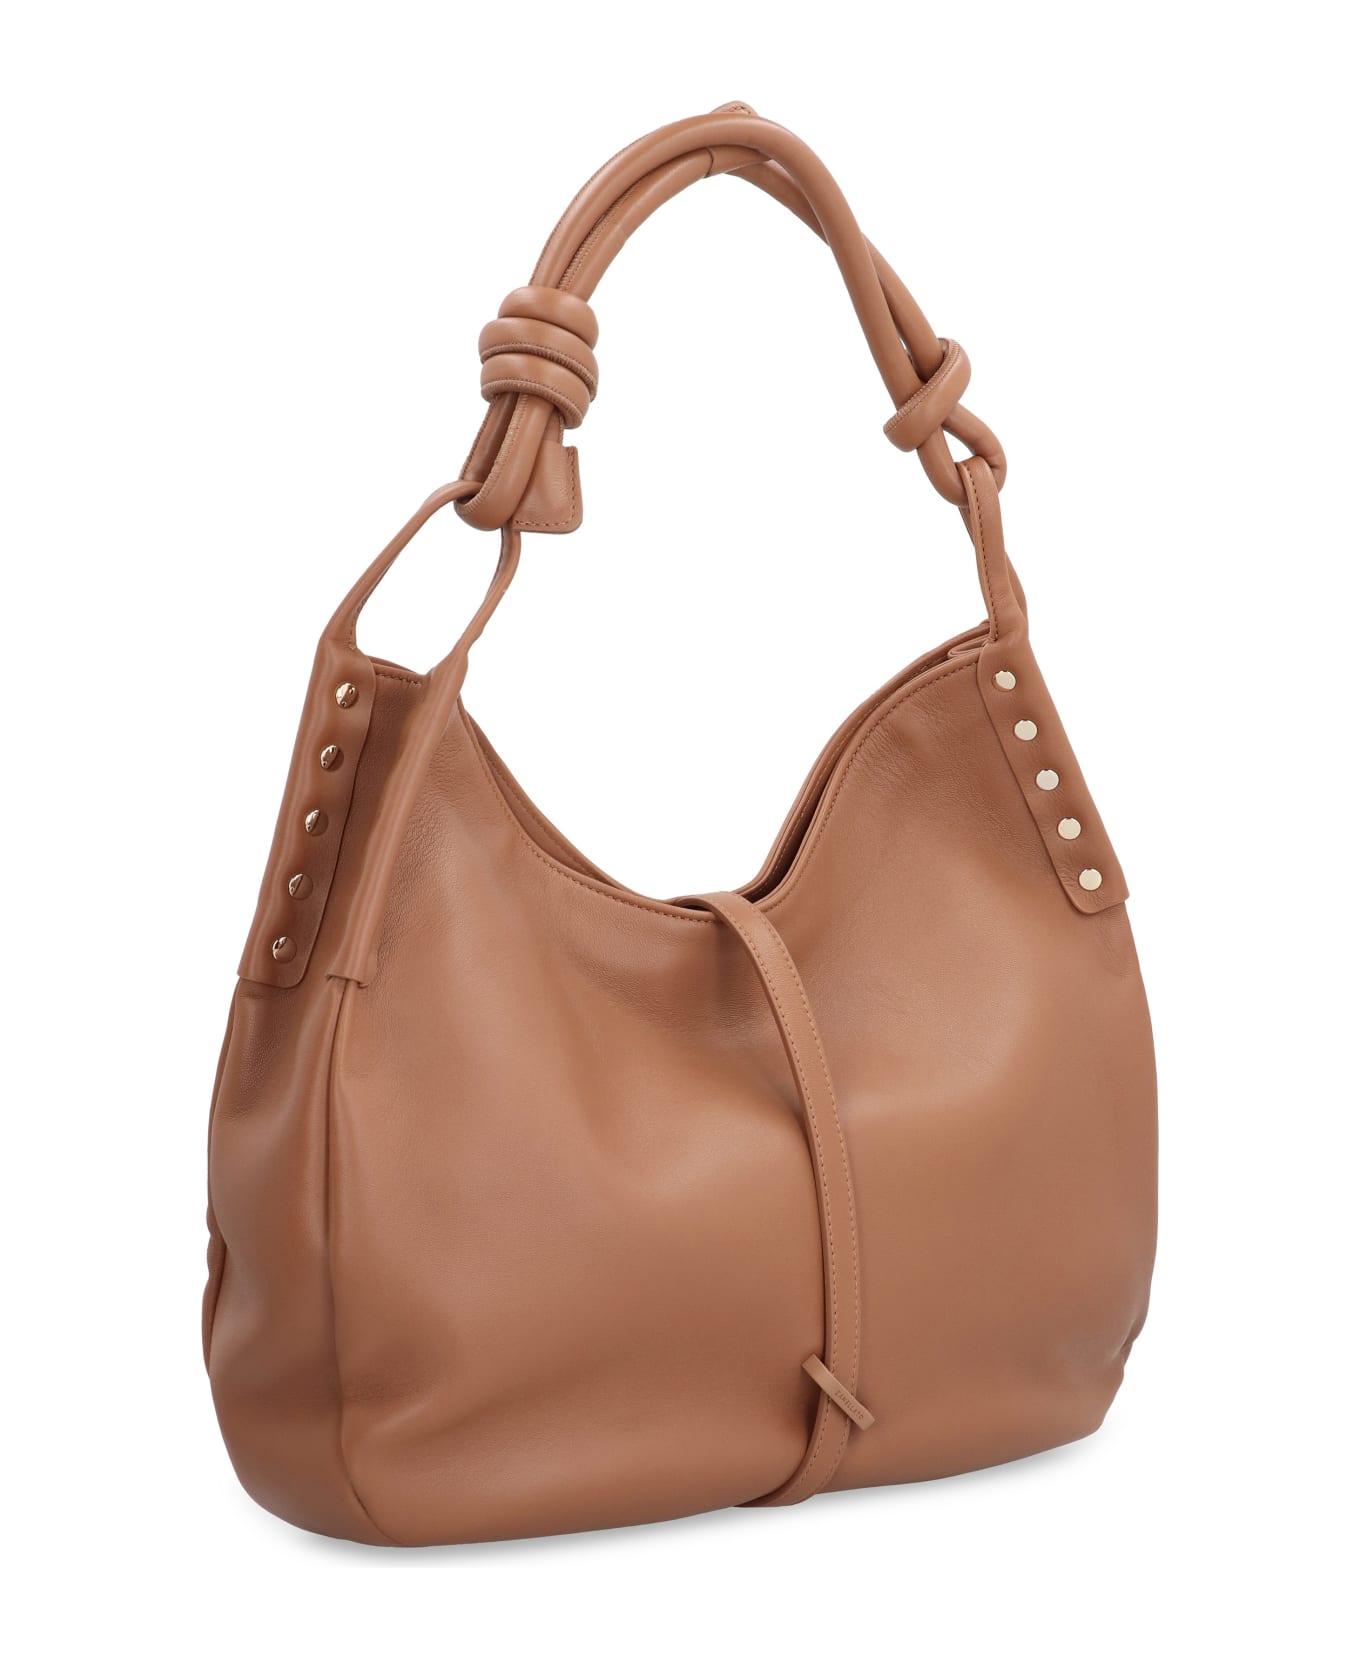 Zanellato Ima Leather Shoulder Bag - Saddle Brown